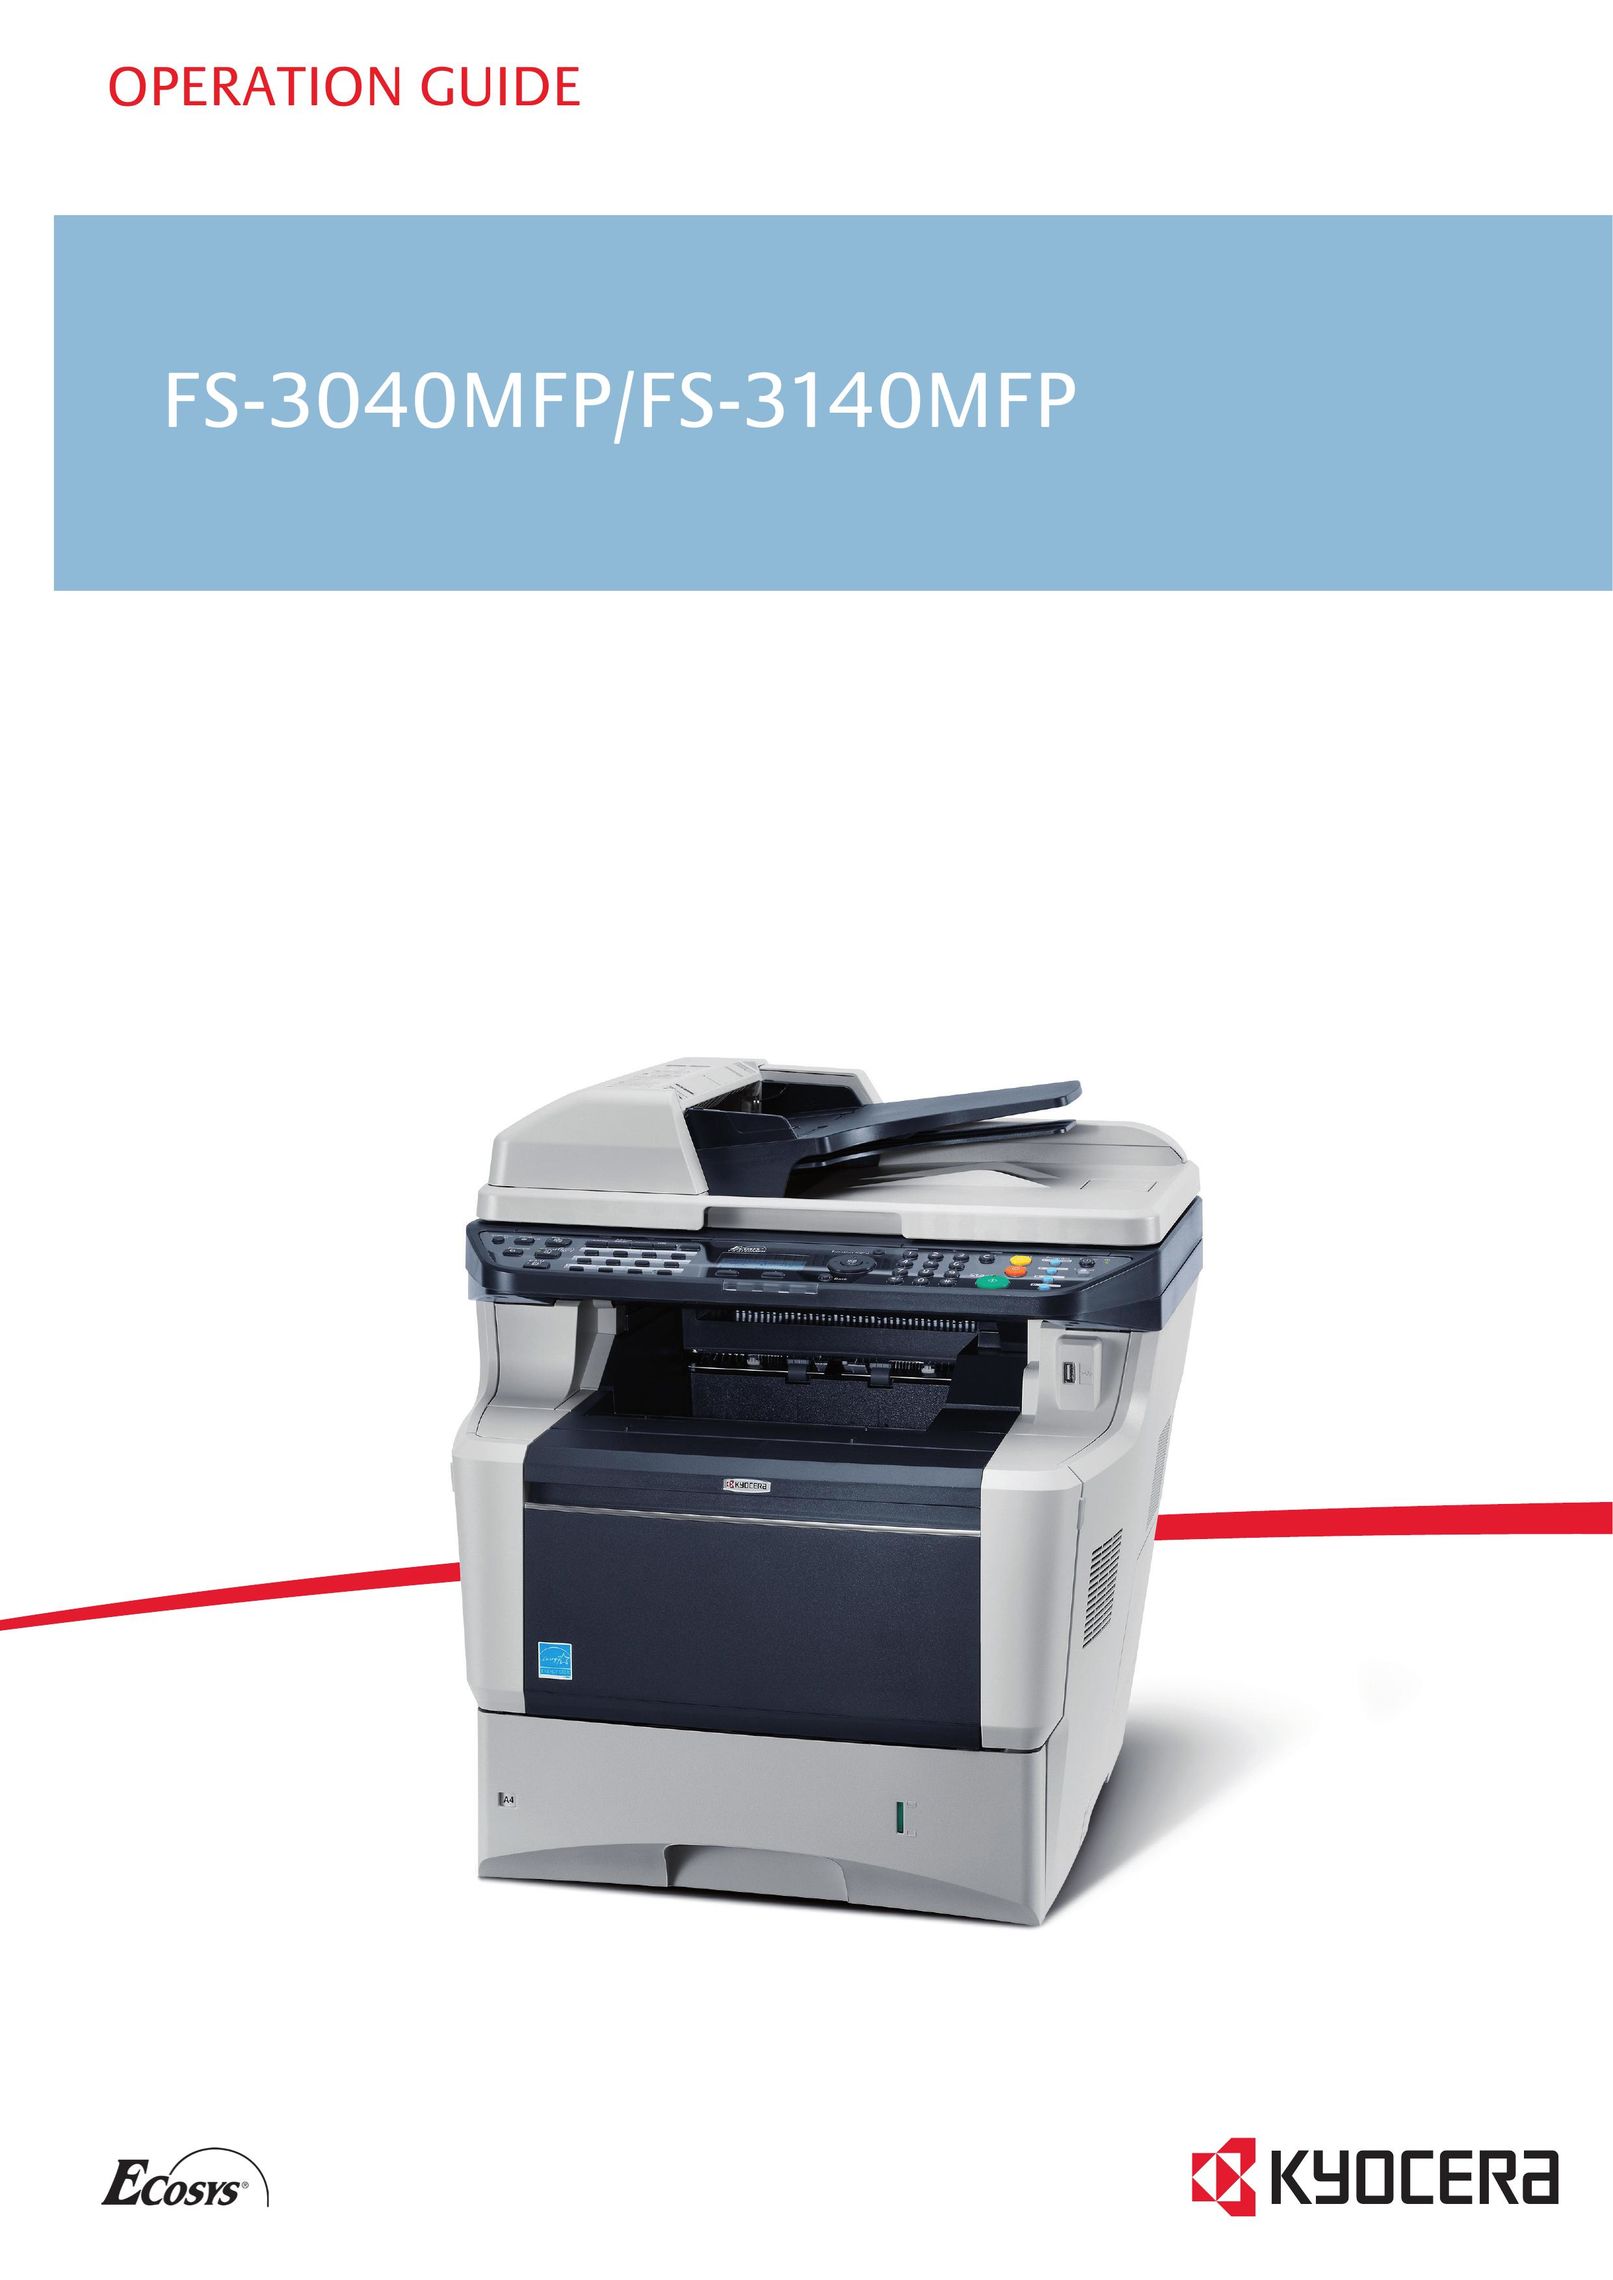 Kyocera FS-3140MFP Printer User Manual